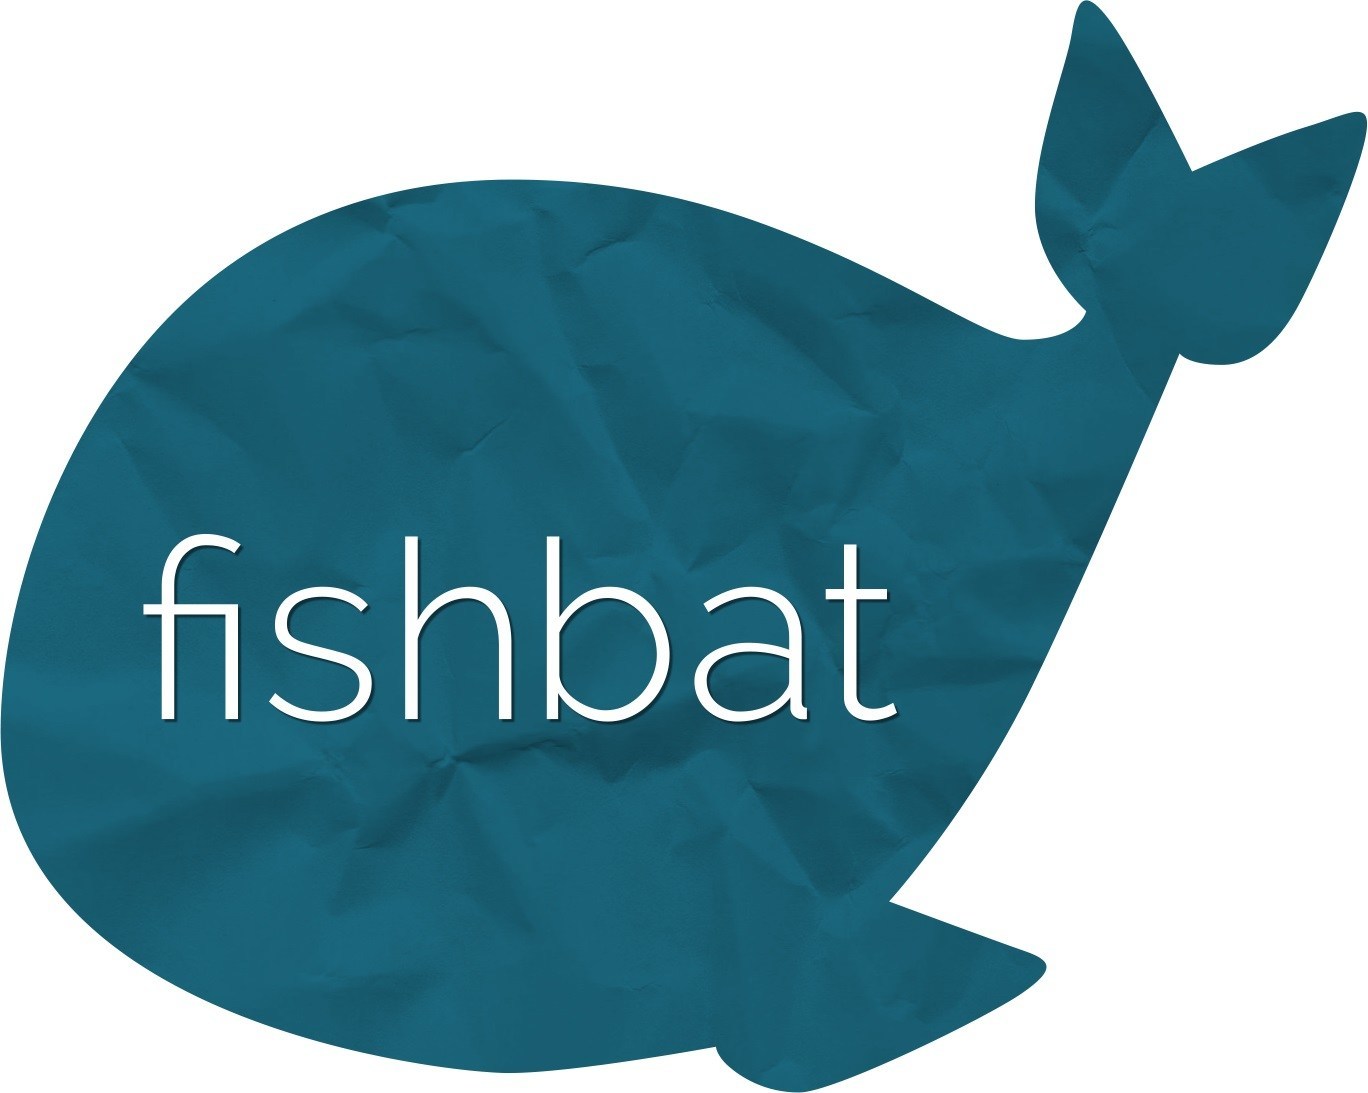 Digital marketing agency, fishbat